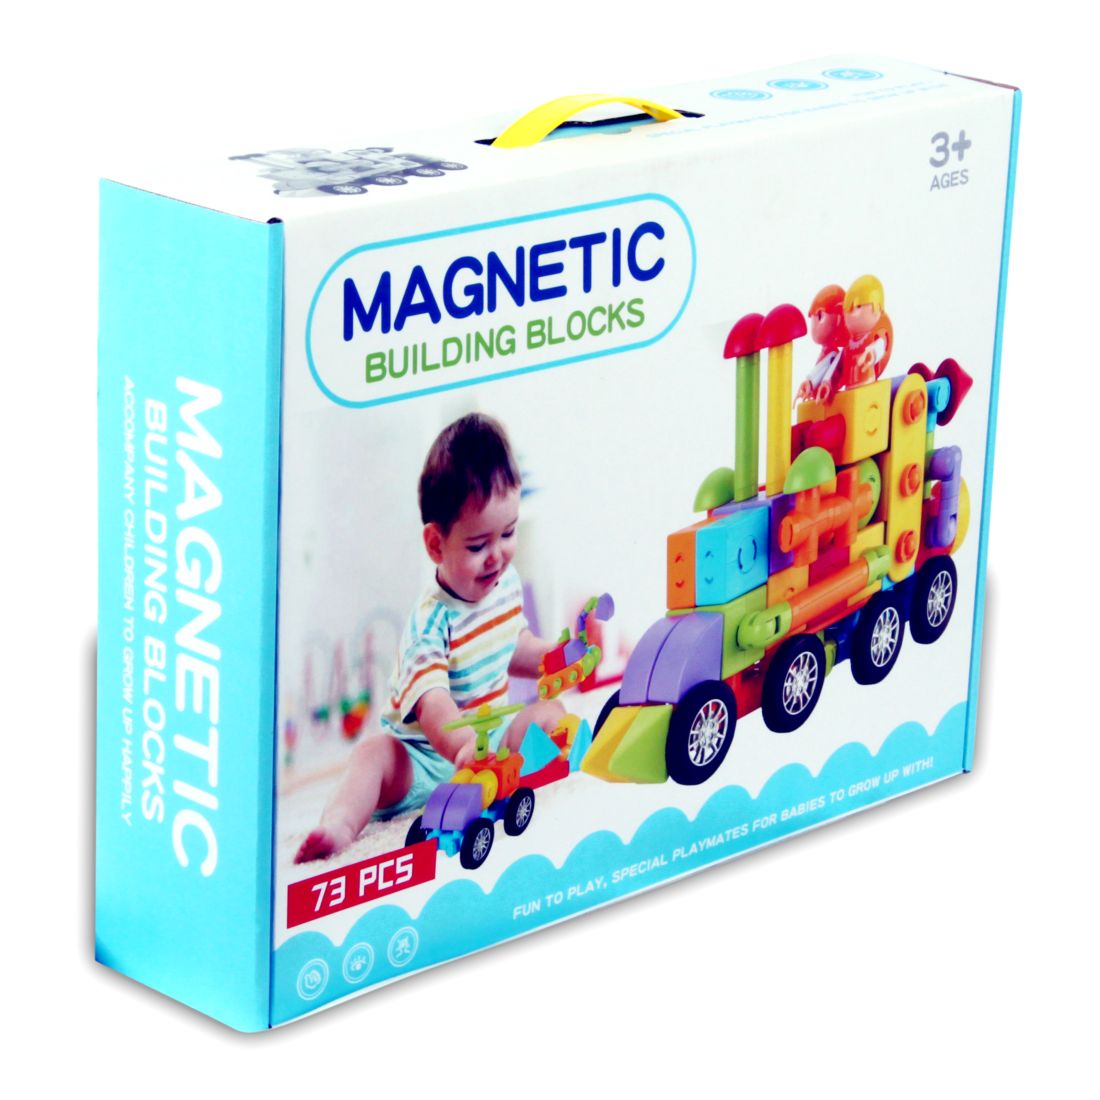 Toys Station Magnetic Building Blocks Set (73 Pieces)